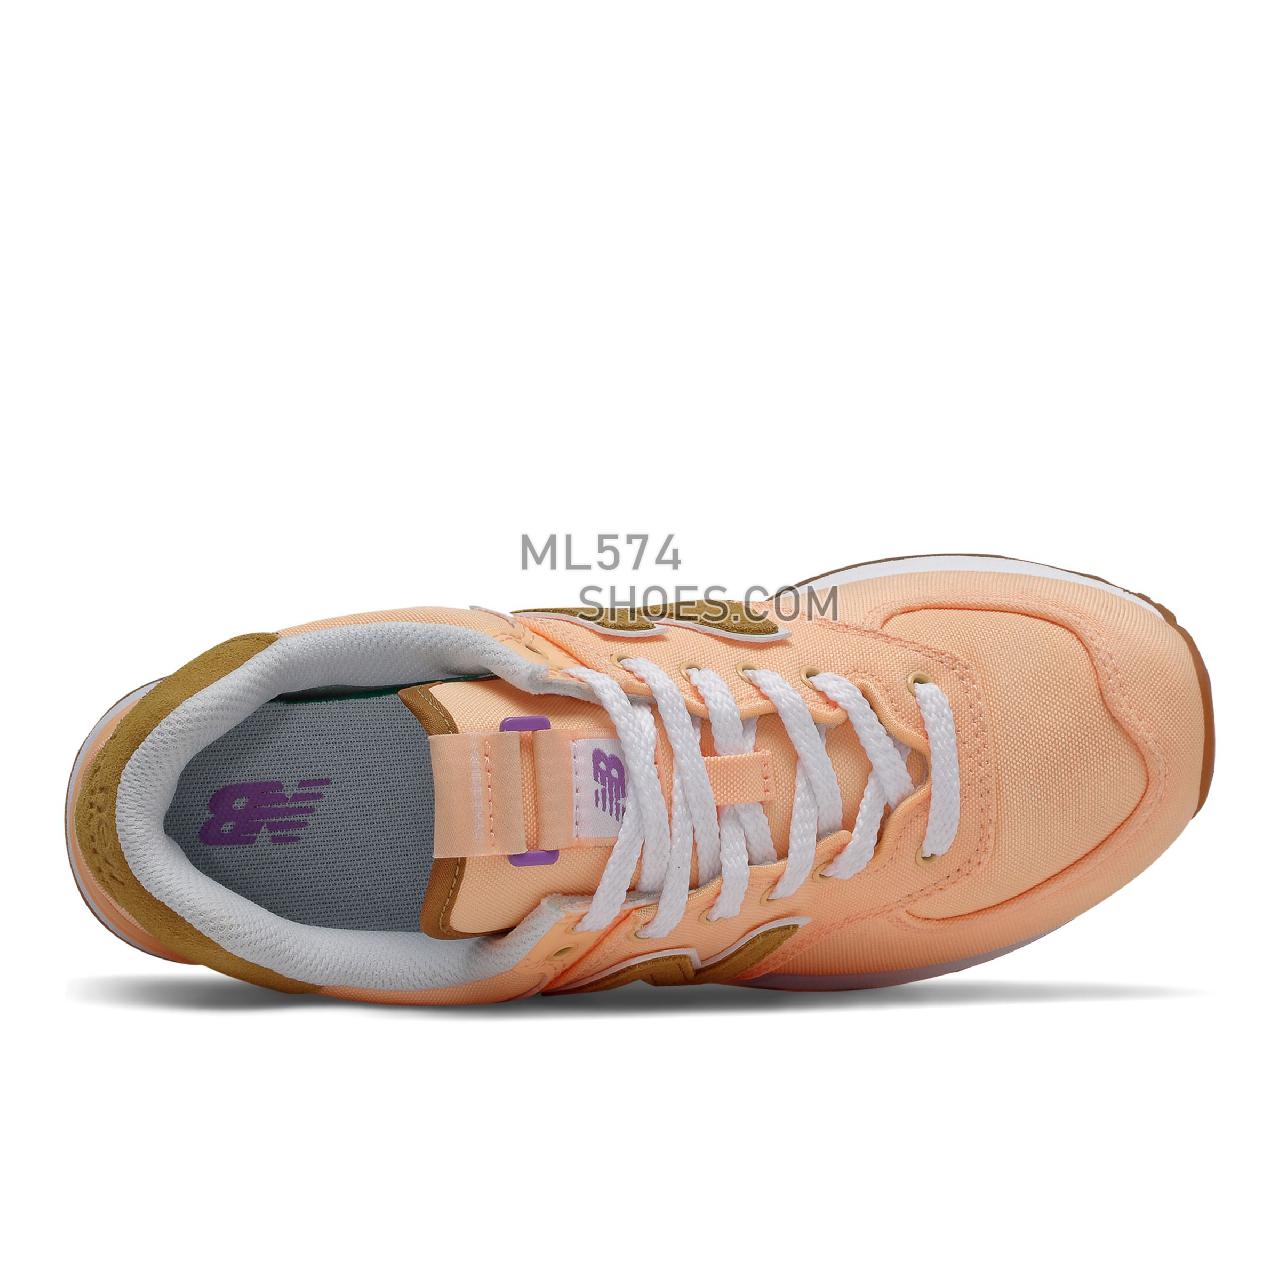 New Balance 574 - Women's Classic Sneakers - Light Mango with Workwear - WL574BK2